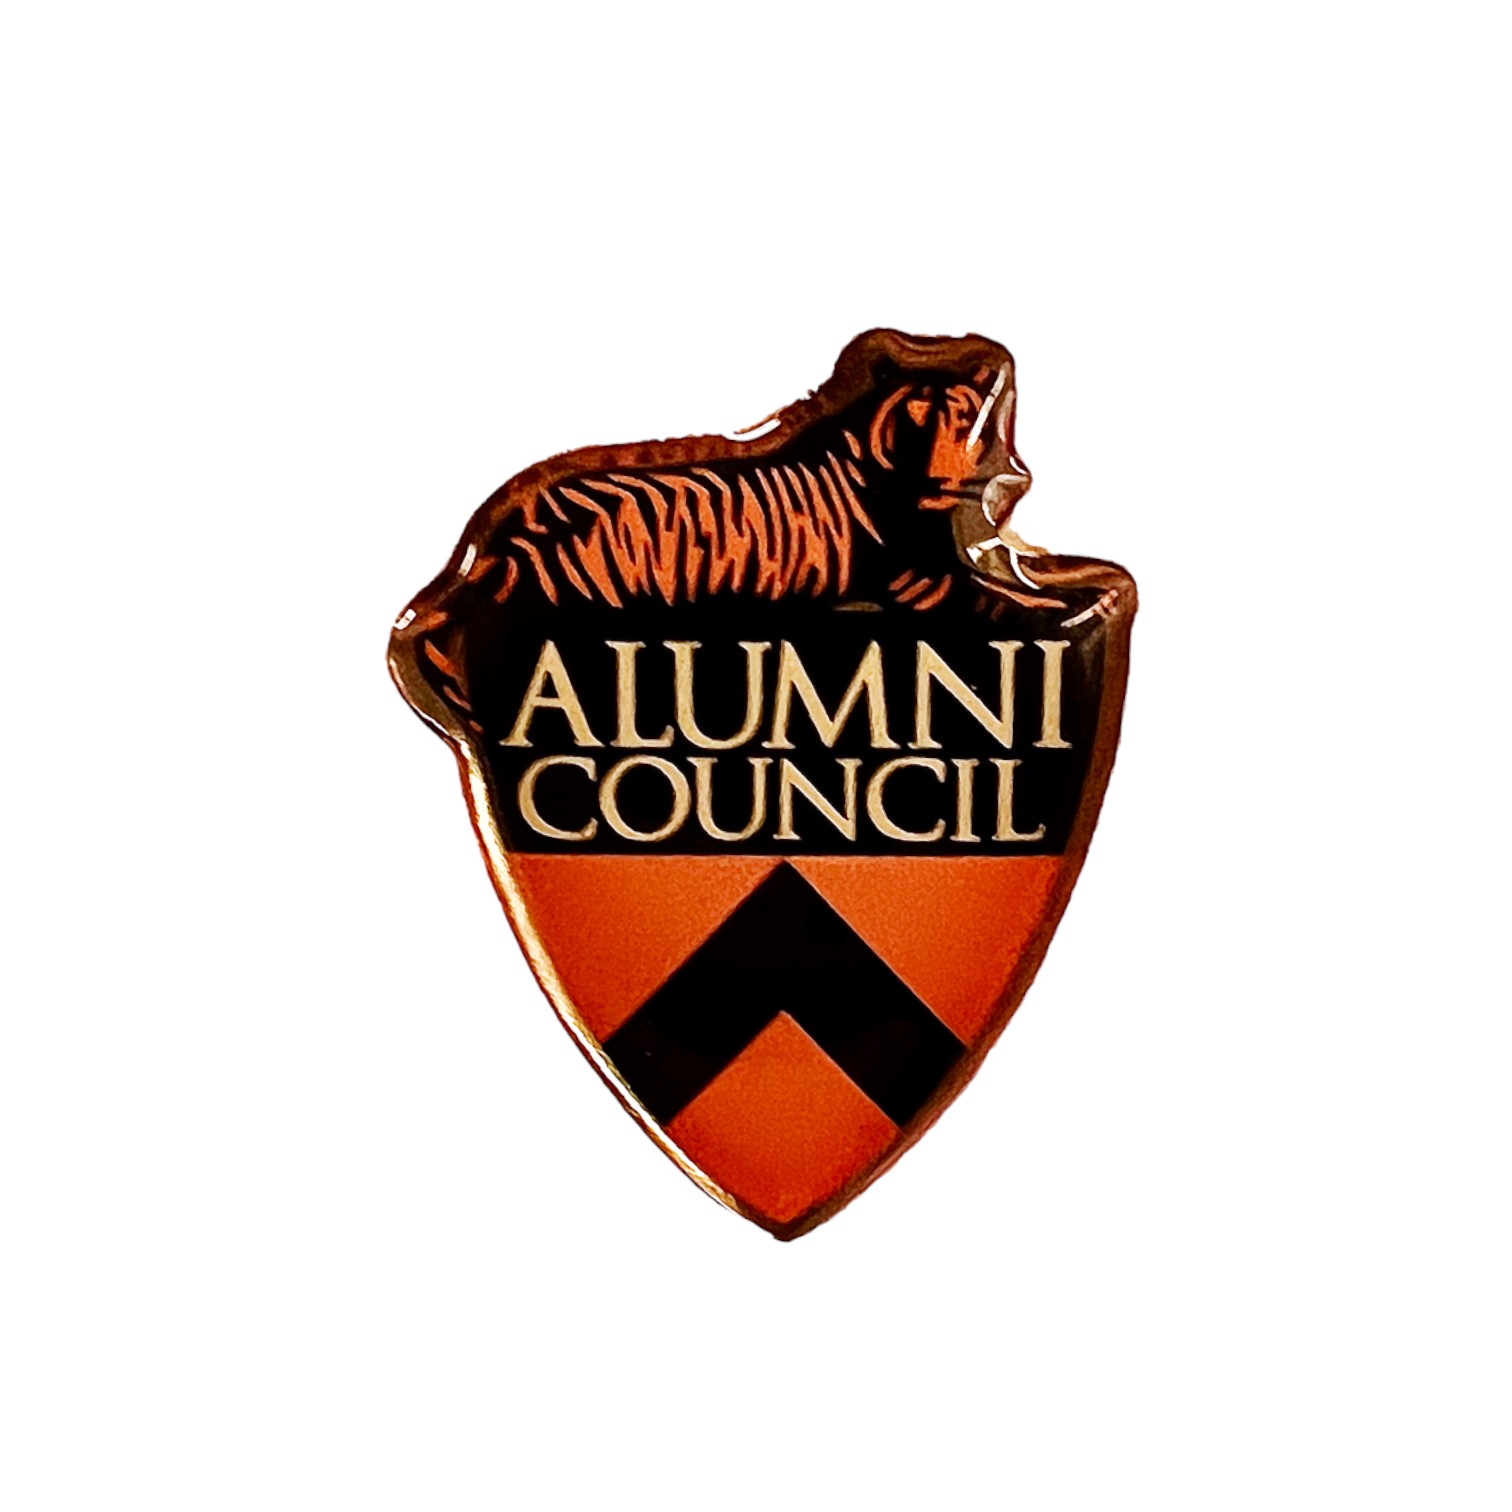 General Alumni Council Executive Committee (ACEC) Pin